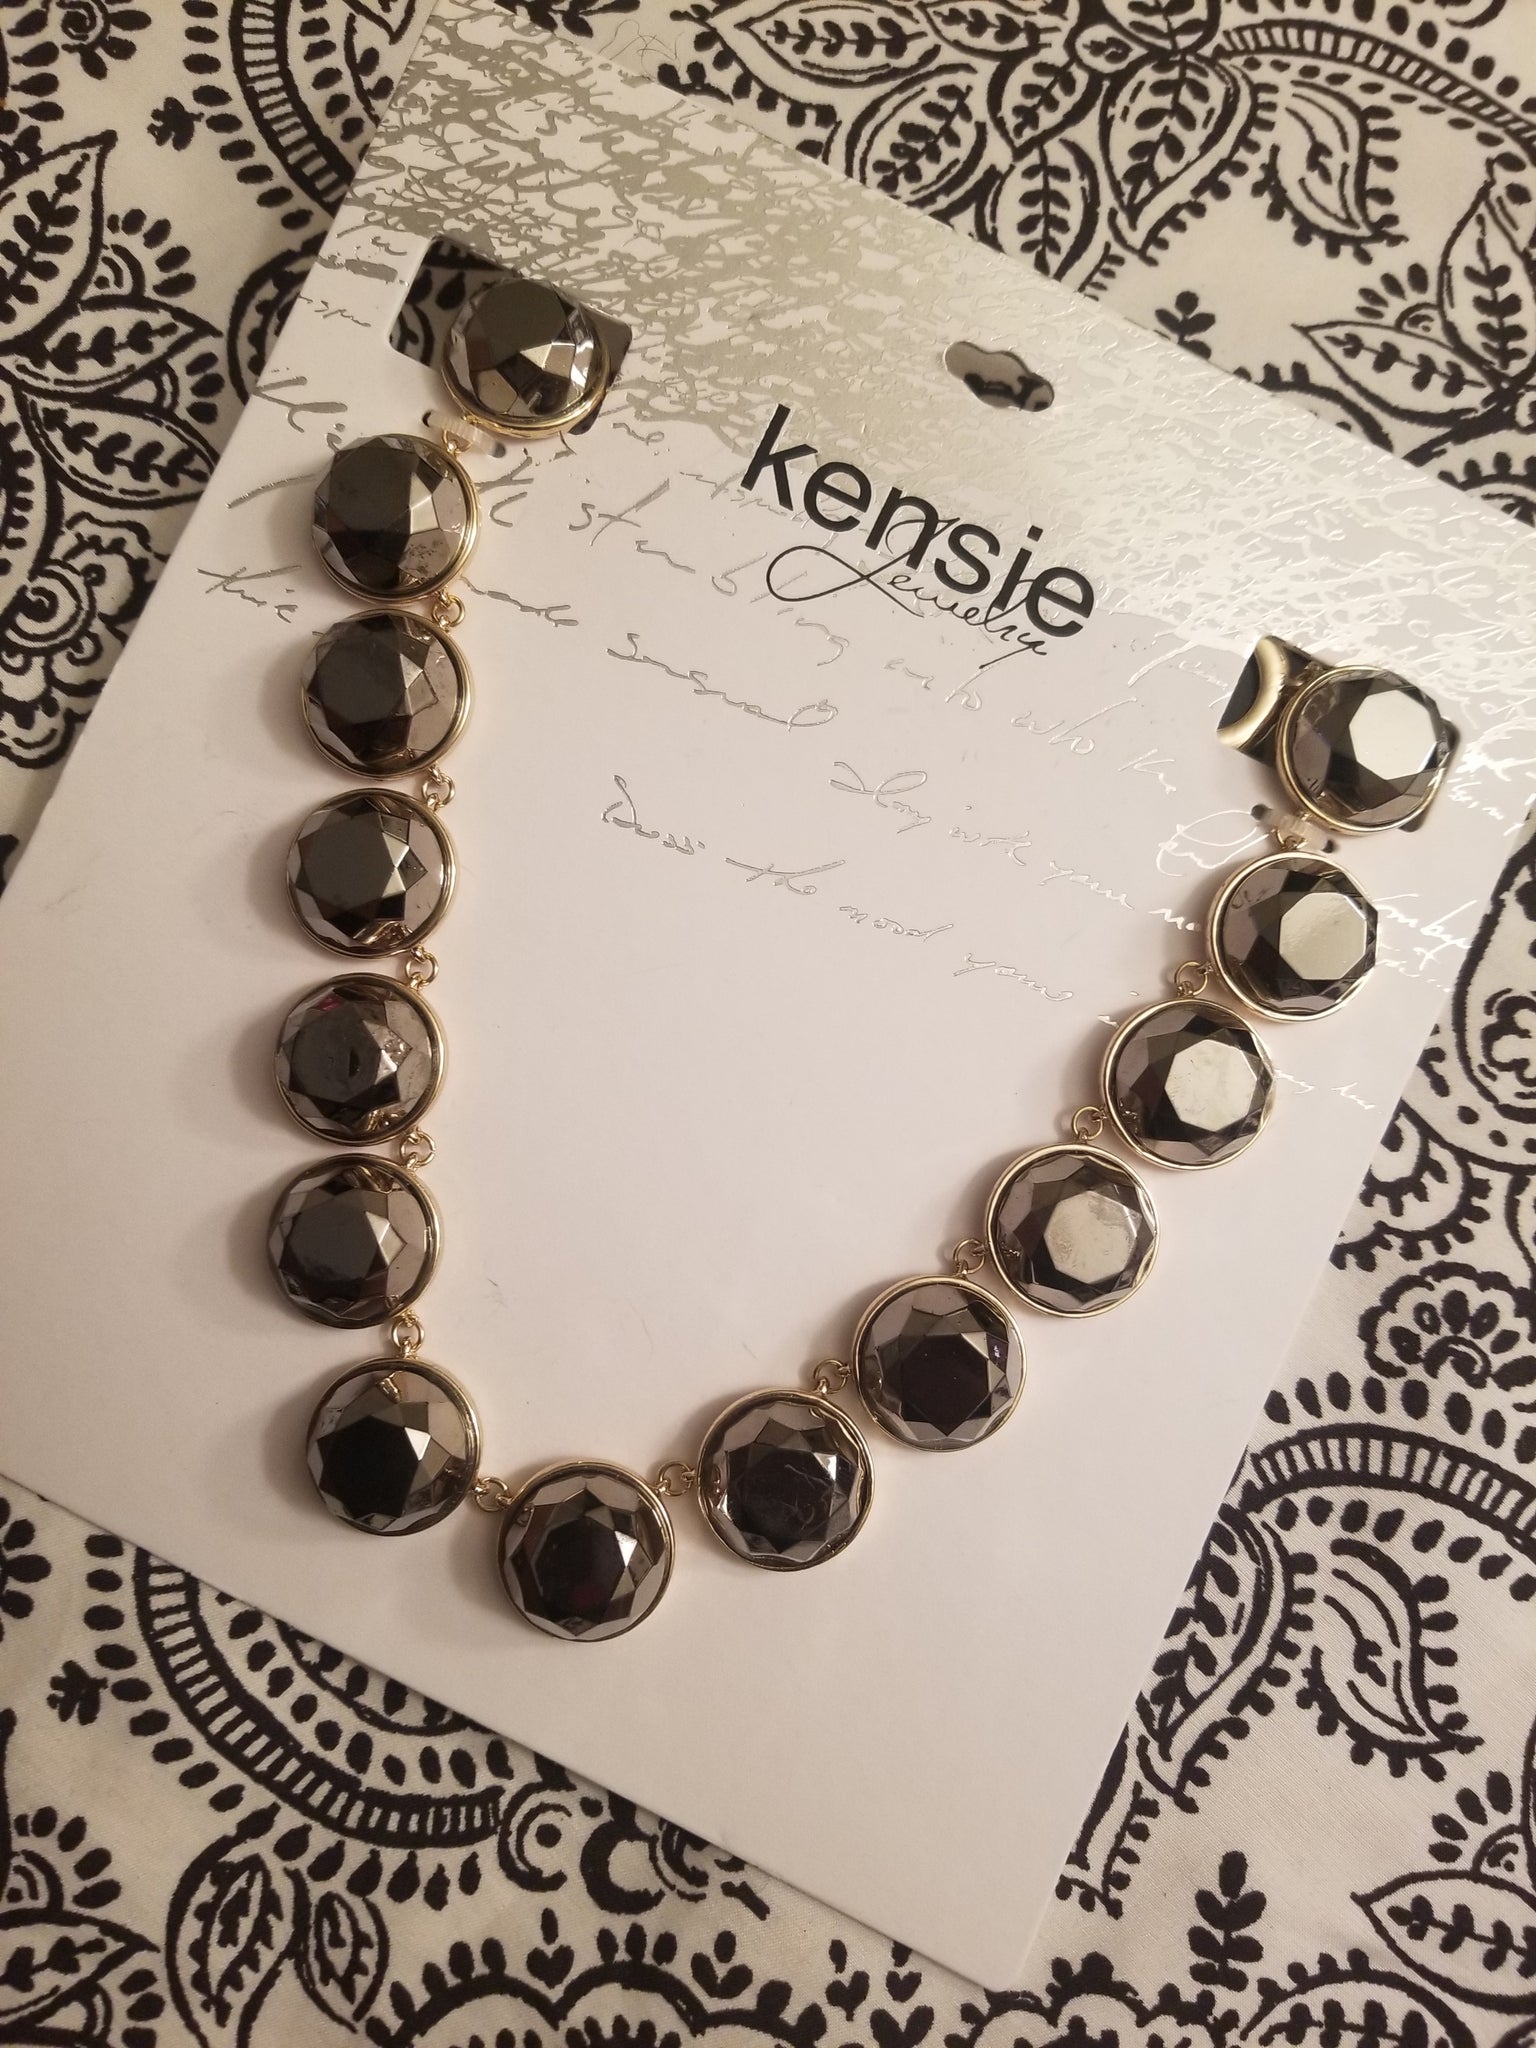 "Kensie" Necklace